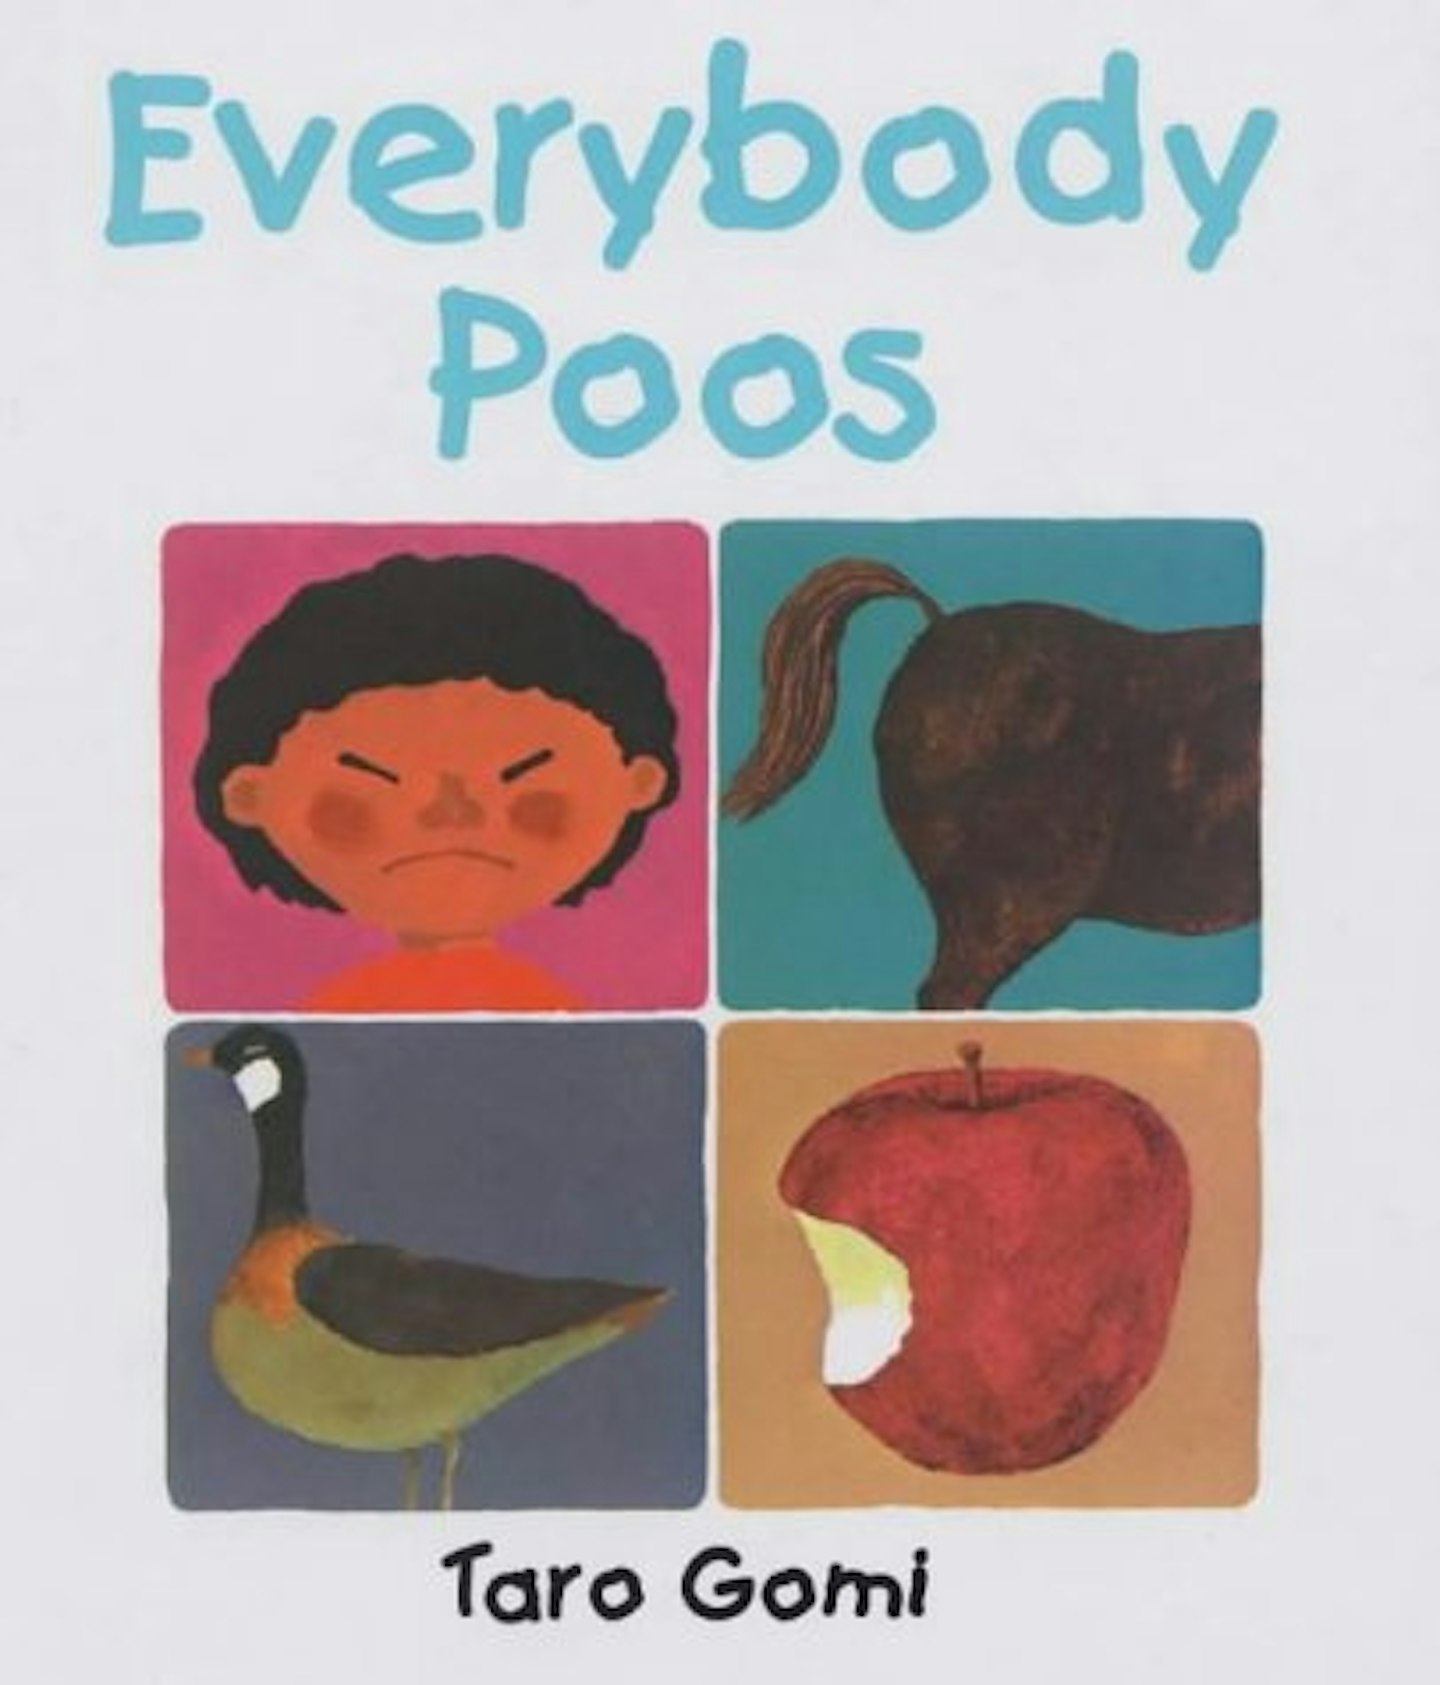 Everybody Poos by Taro Gomi